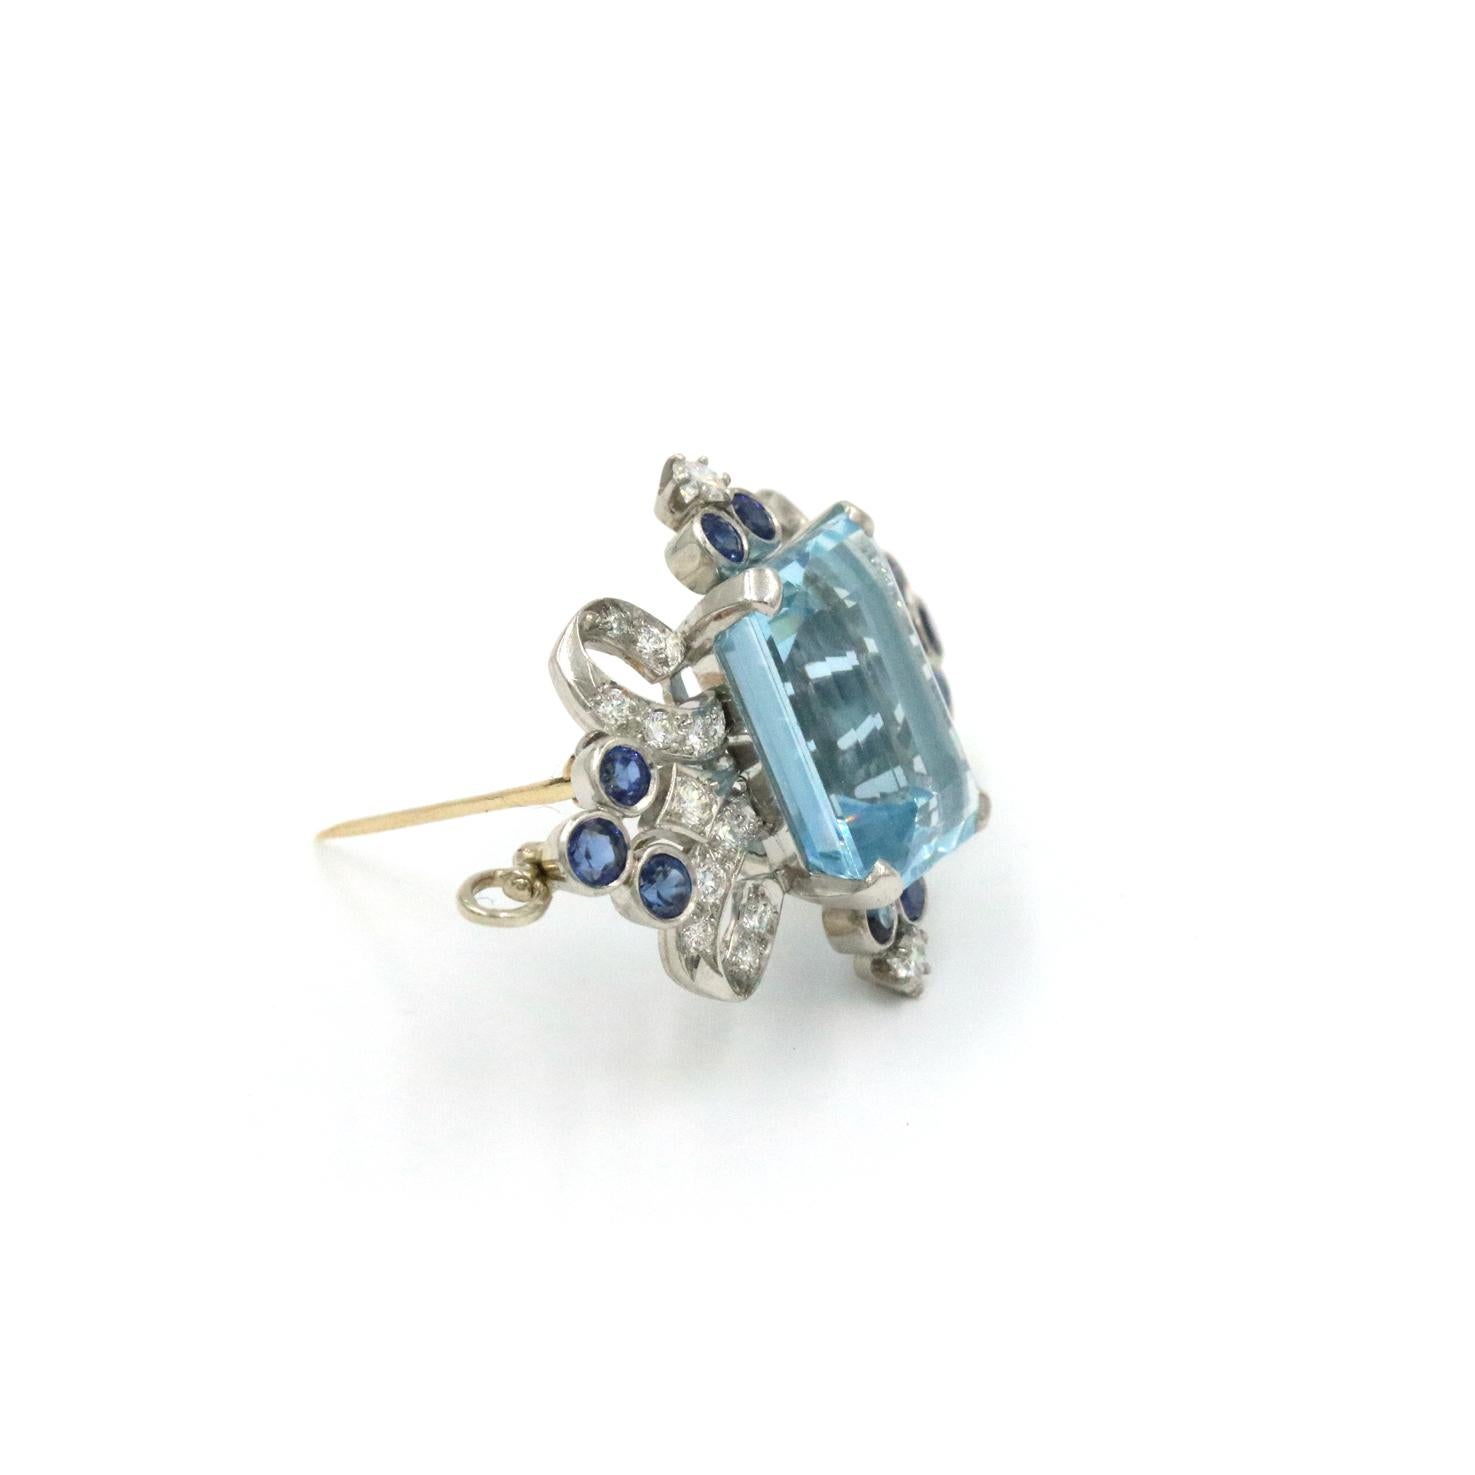 Art Deco Tiffany & Co. Pin / Pendant with Aquamarine, Sapphires and Diamonds in Platinum